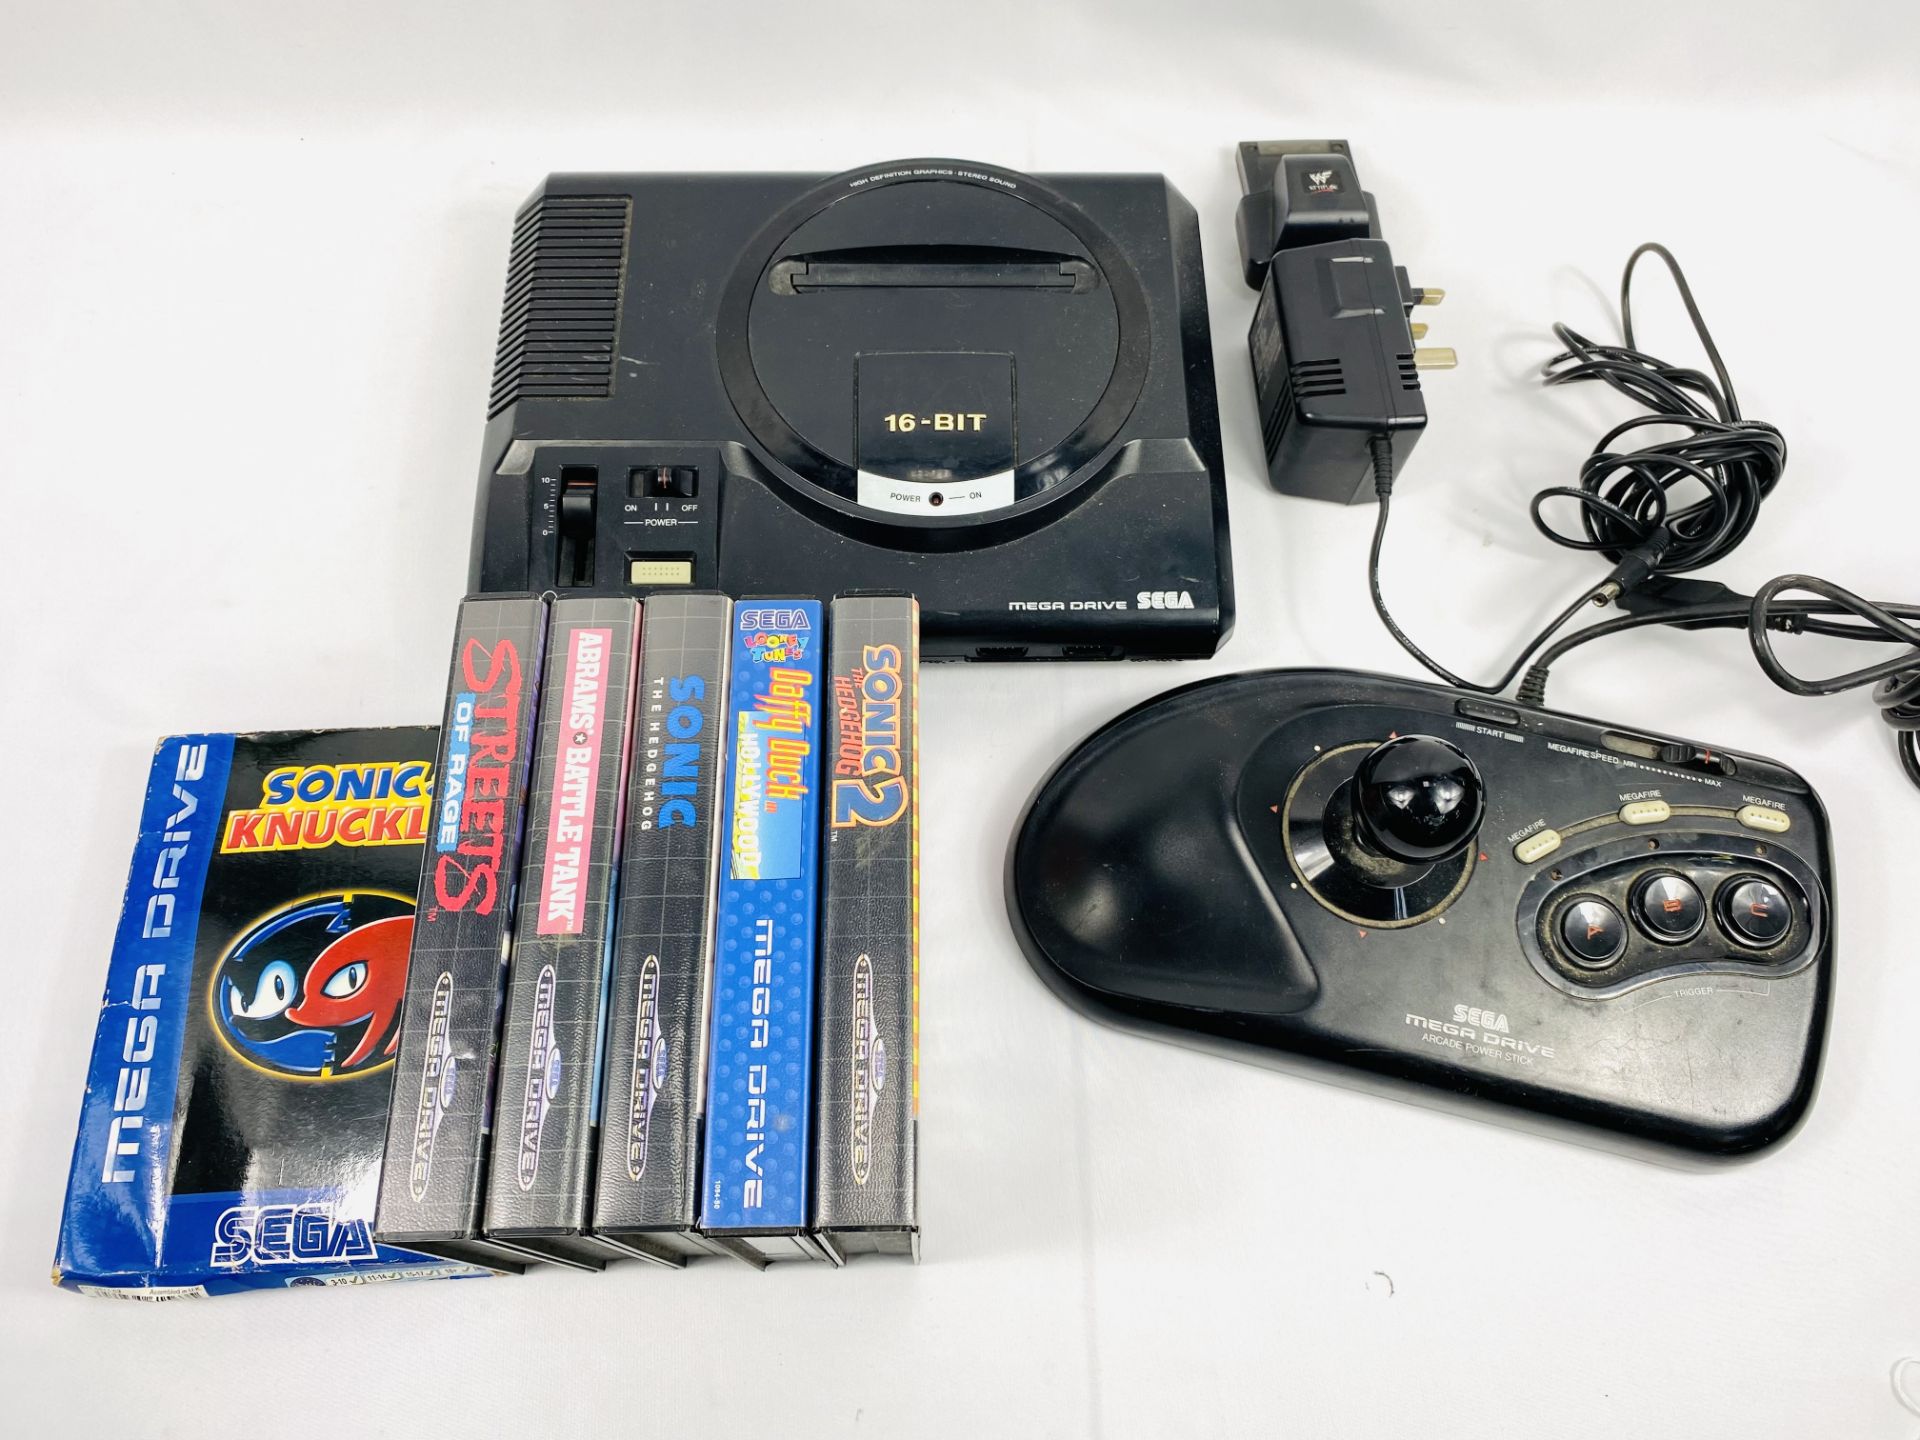 Sega Mega drive with games and accessories